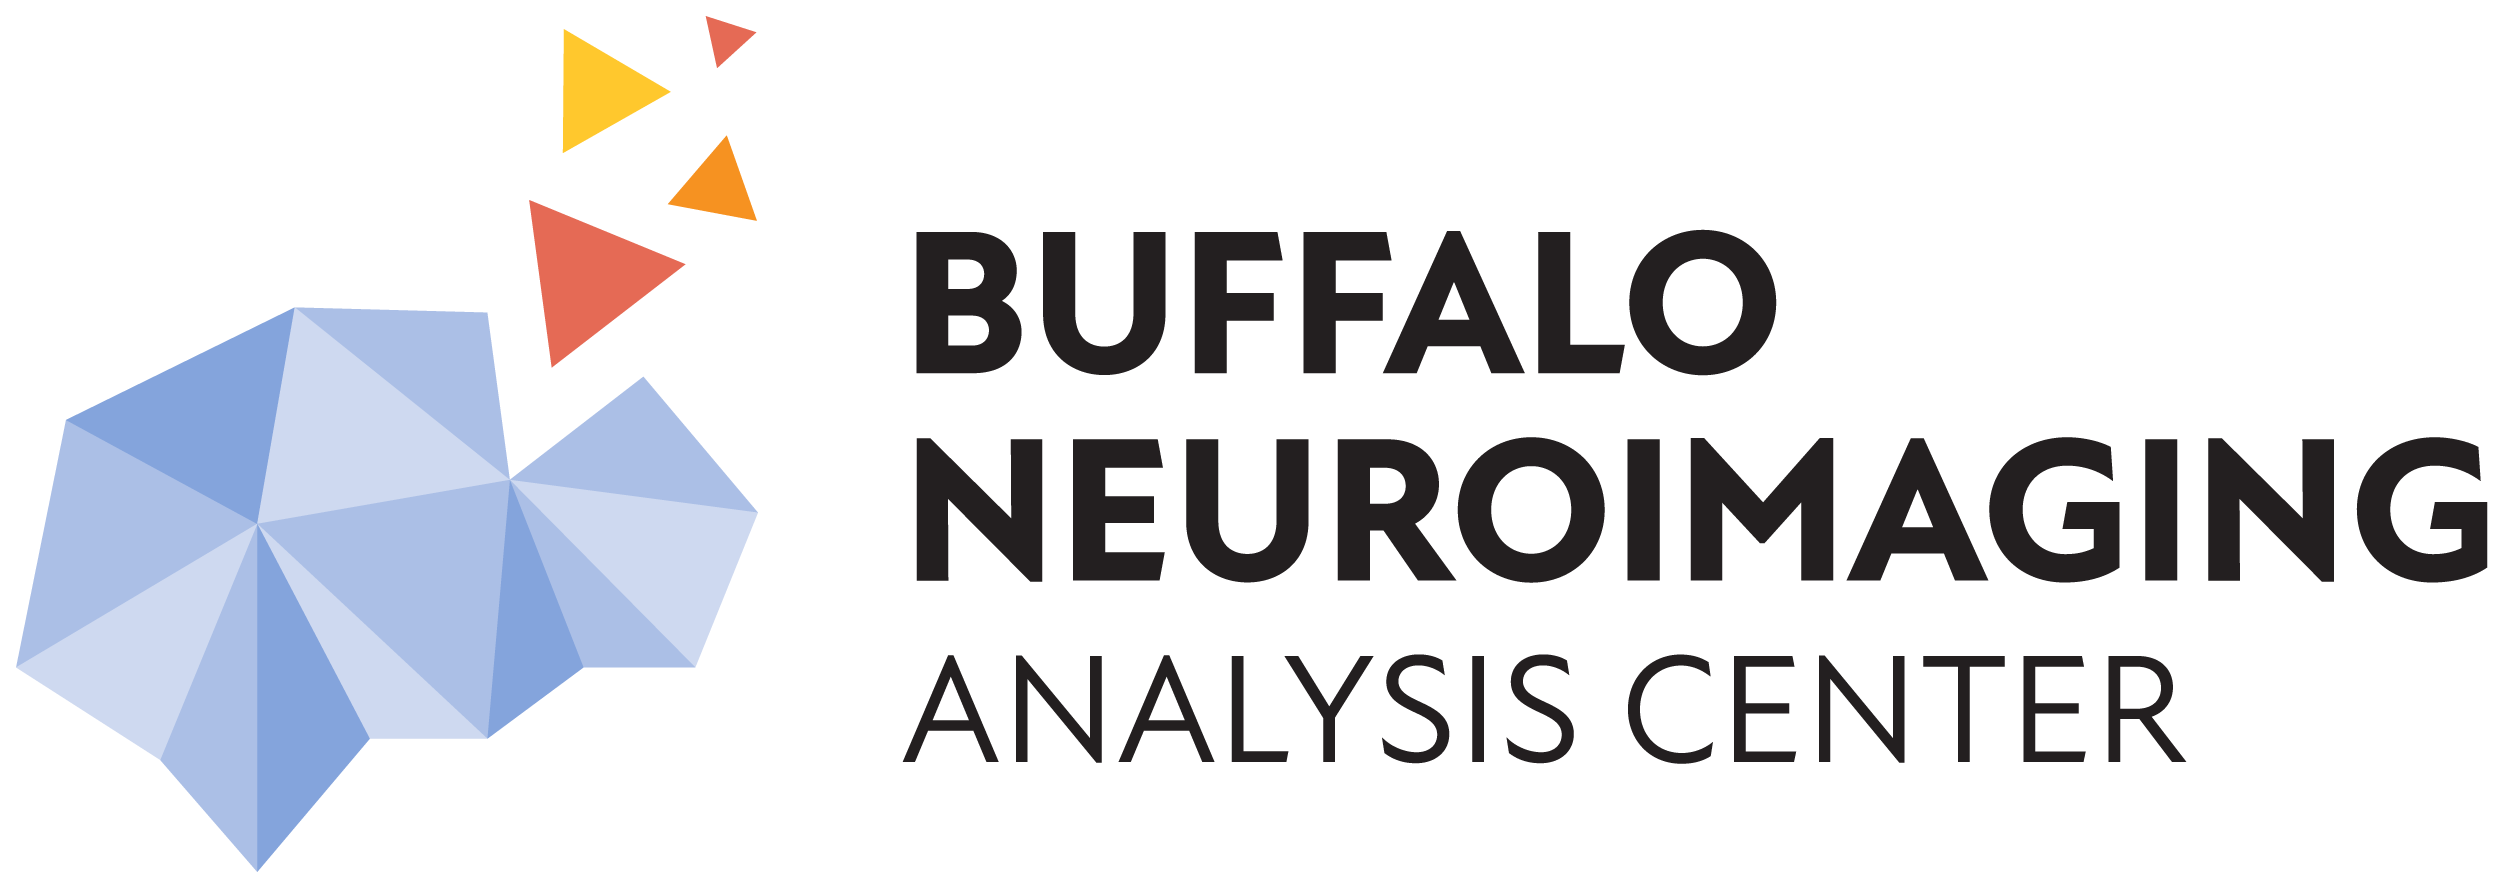 Buffalo Neuroimaging Analysis Center